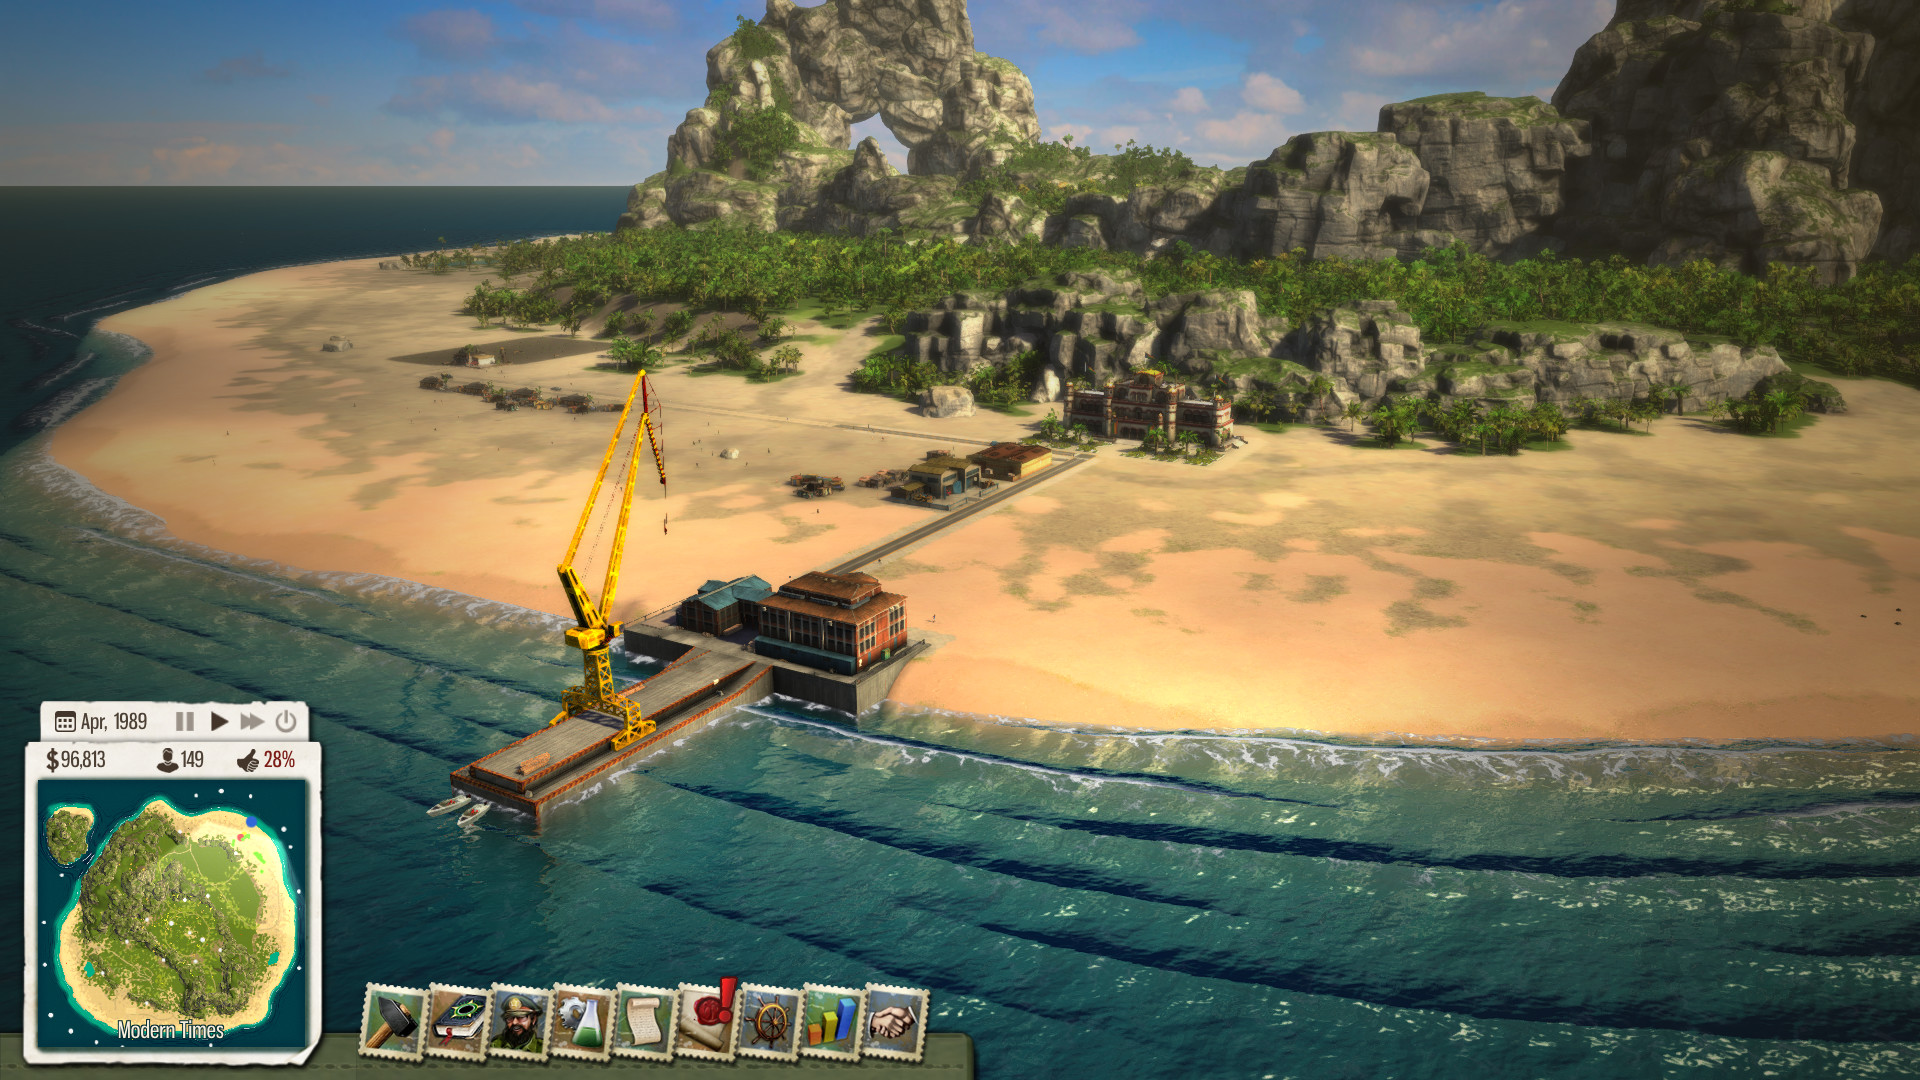 Tropico 5 - Map Pack Featured Screenshot #1